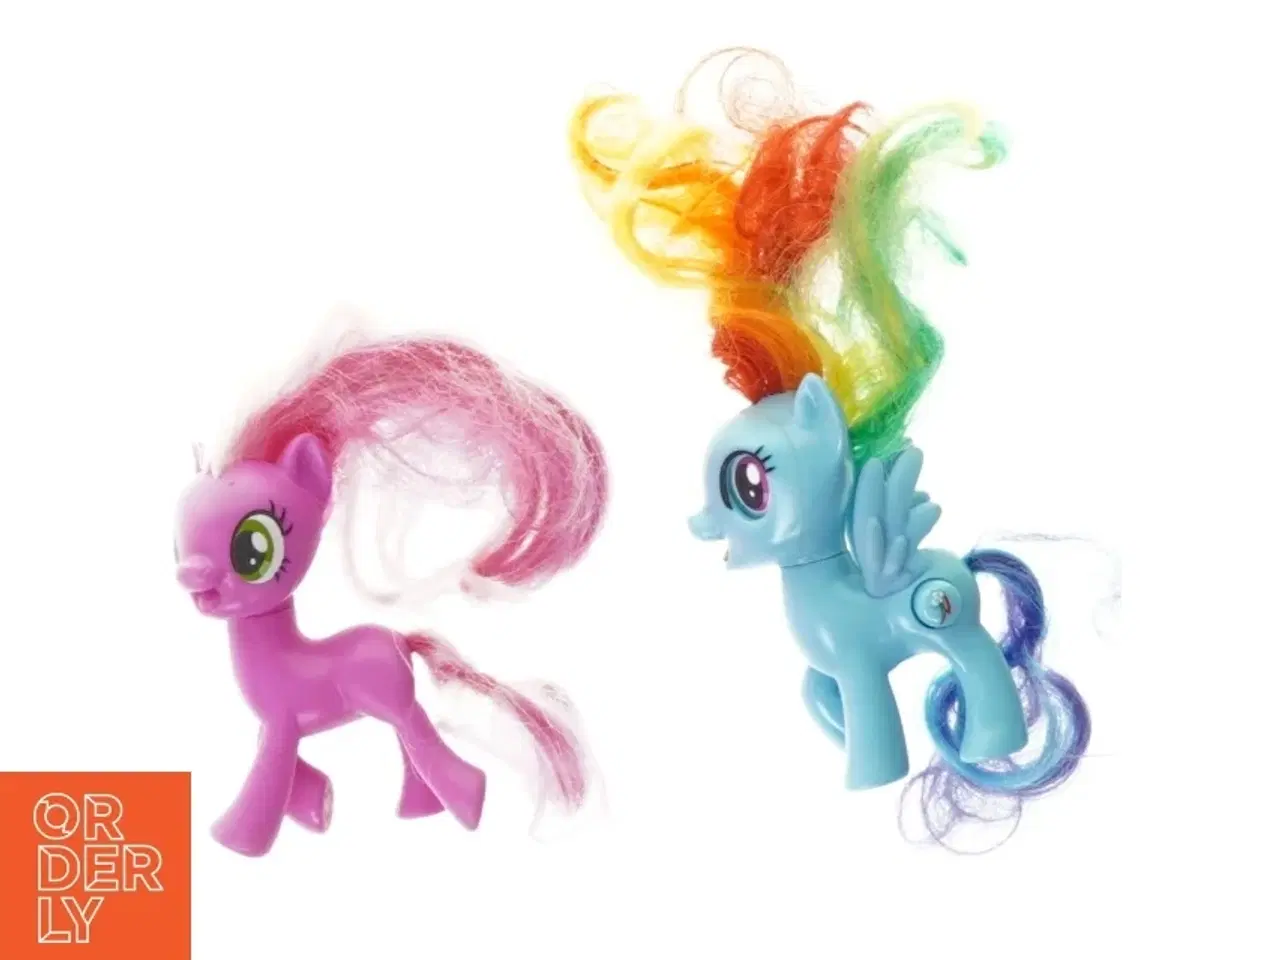 Billede 1 - My little pony fra My Little Pony (str. 5 x 8 cm)